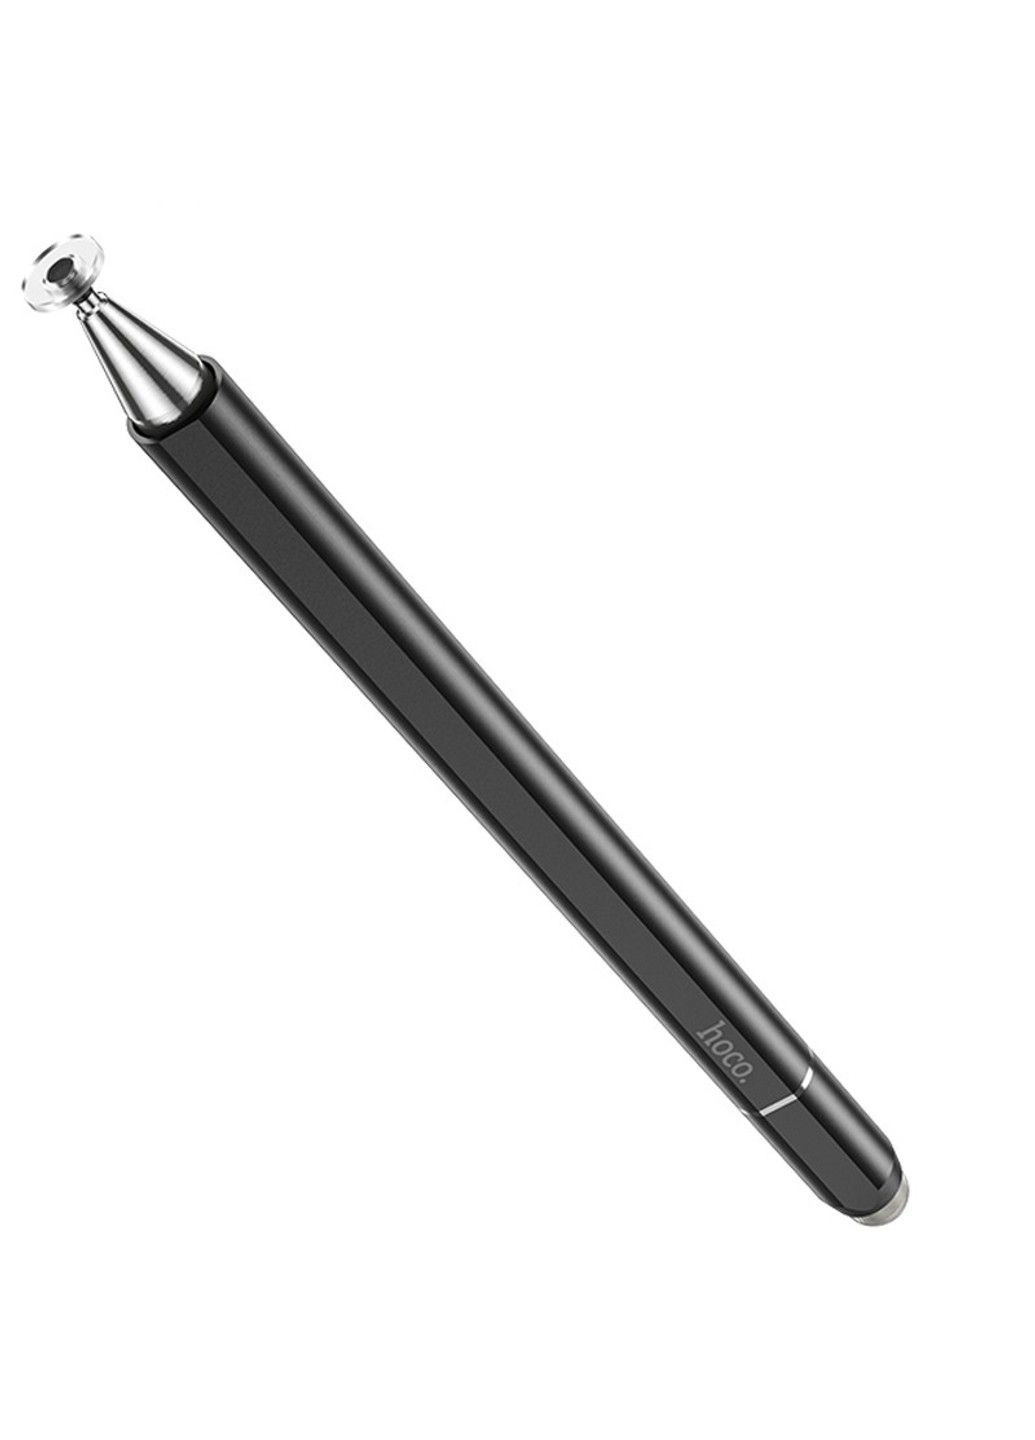 Стилус GM111 Cool Dynamic series 3in1 Passive Universal Capacitive Pen Hoco (292131830)